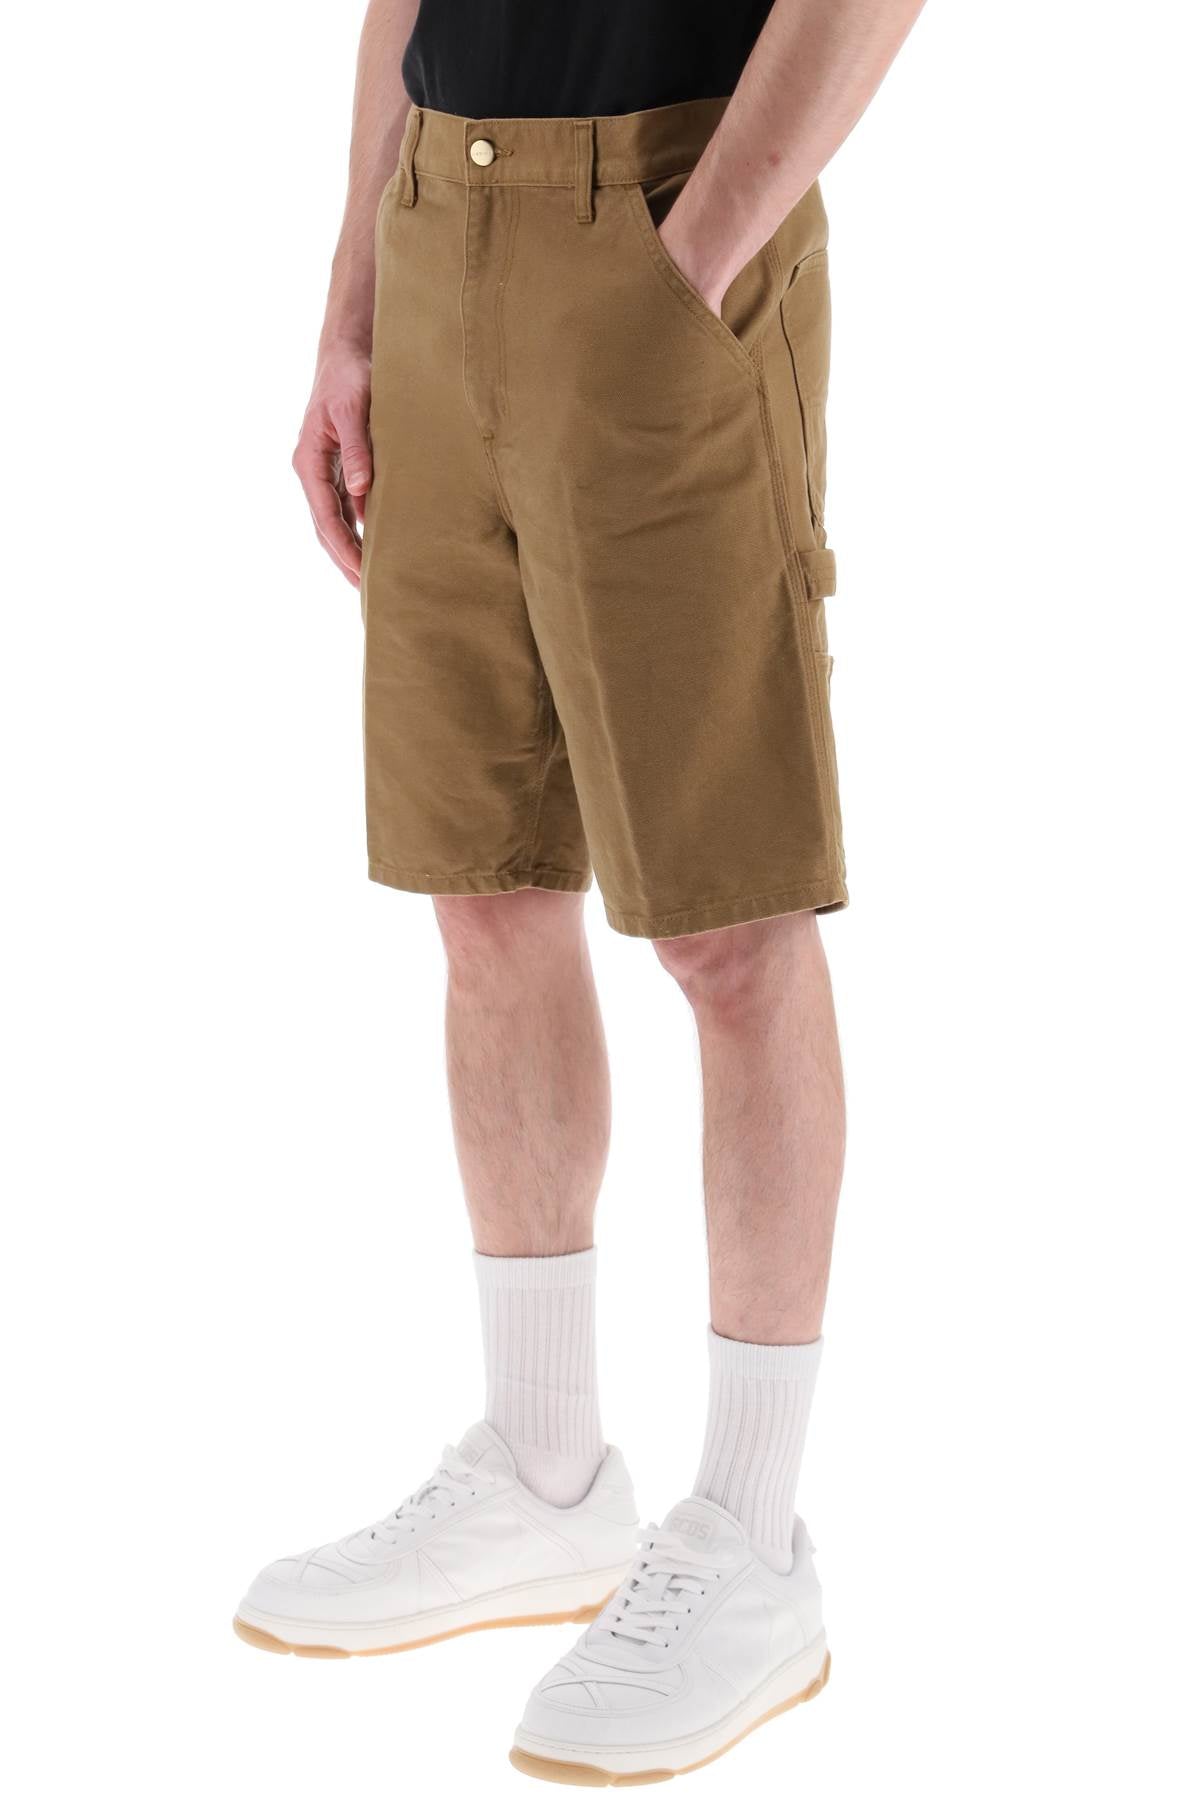 Carhartt wip organic cotton shorts-3